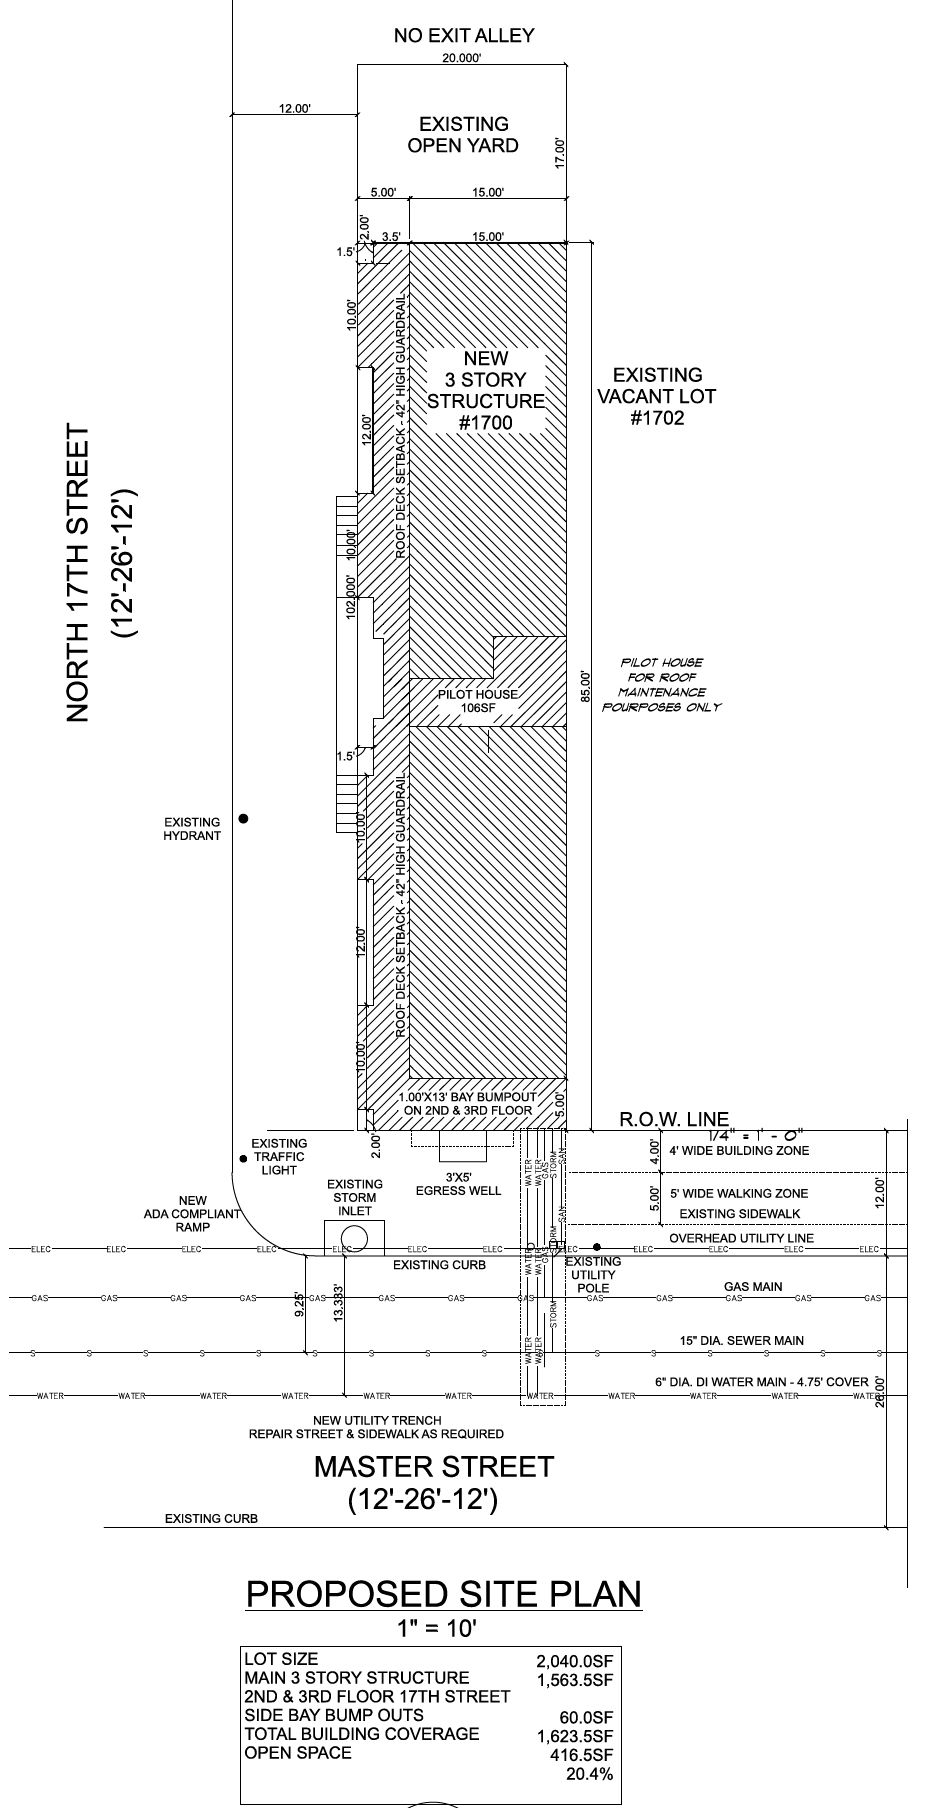 1700 Master Street. Site plan. Credit: Here's The Plan, LLC via the City of Philadelphia